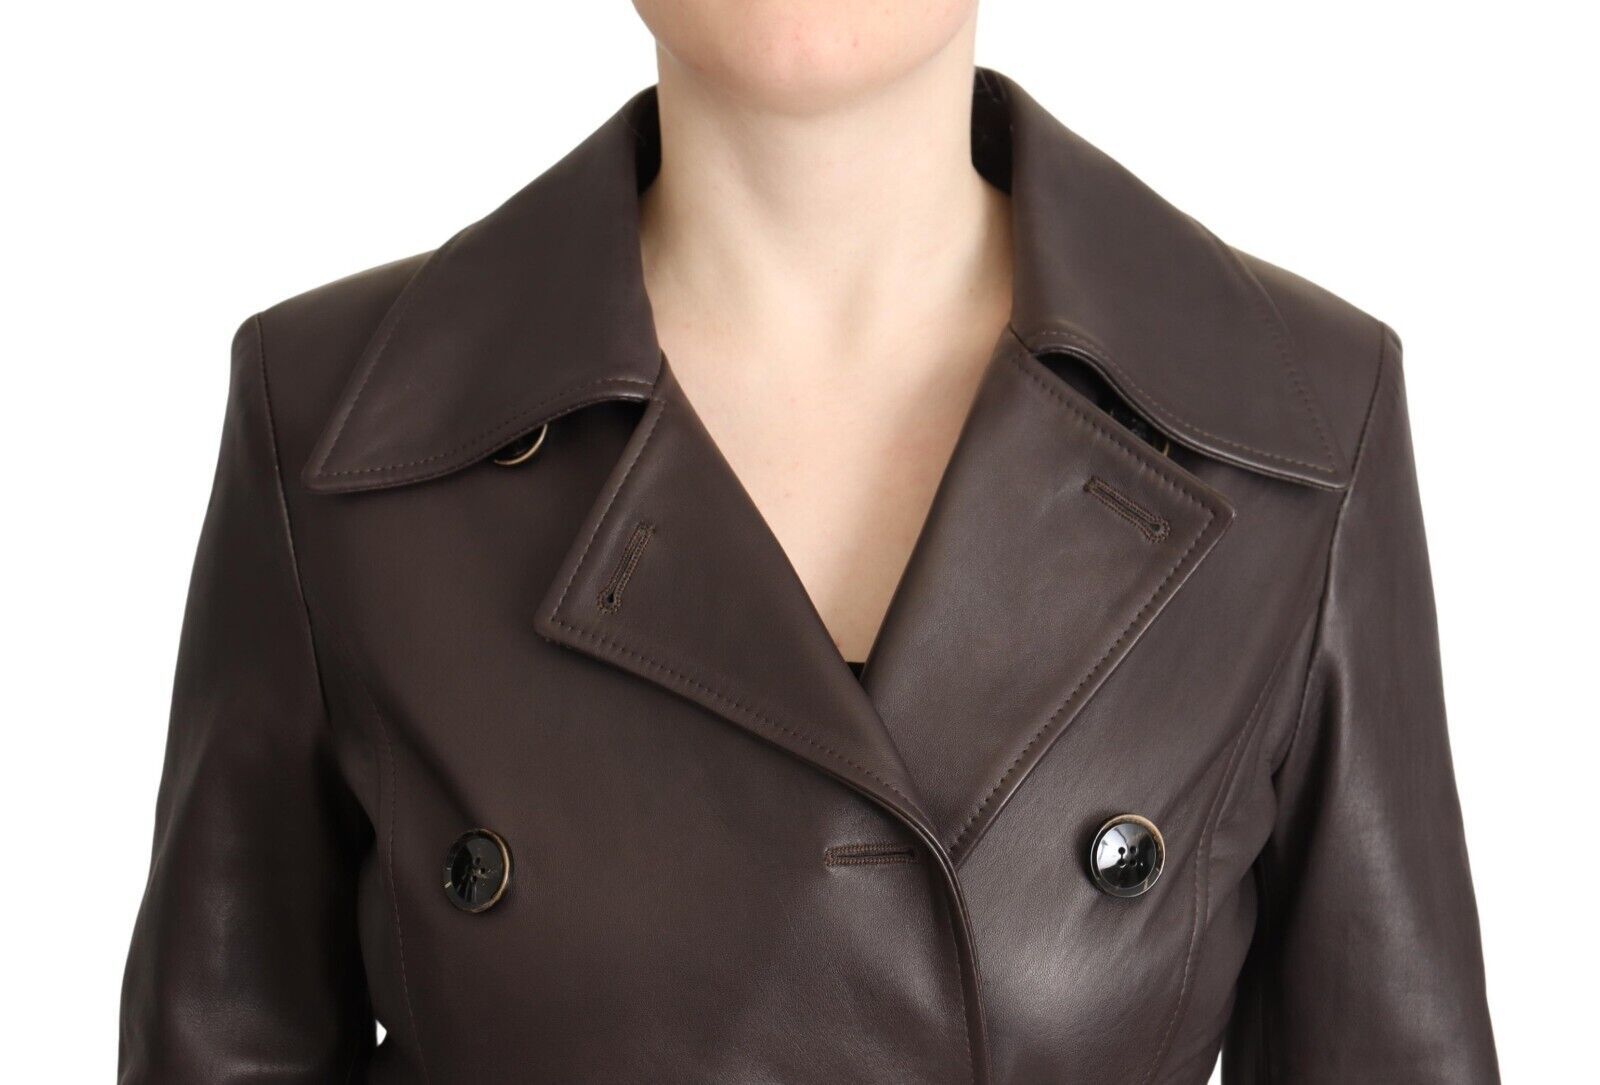 Elegant Double-Breasted Lambskin Leather Coat